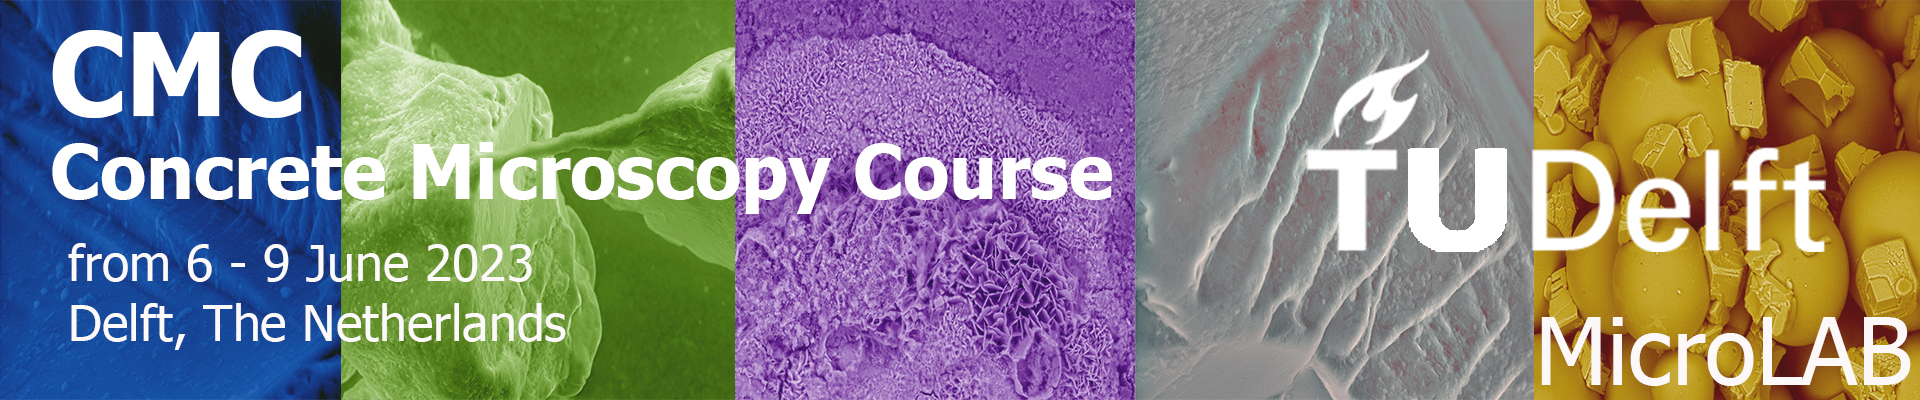 Concrete Microscopy Course 2023